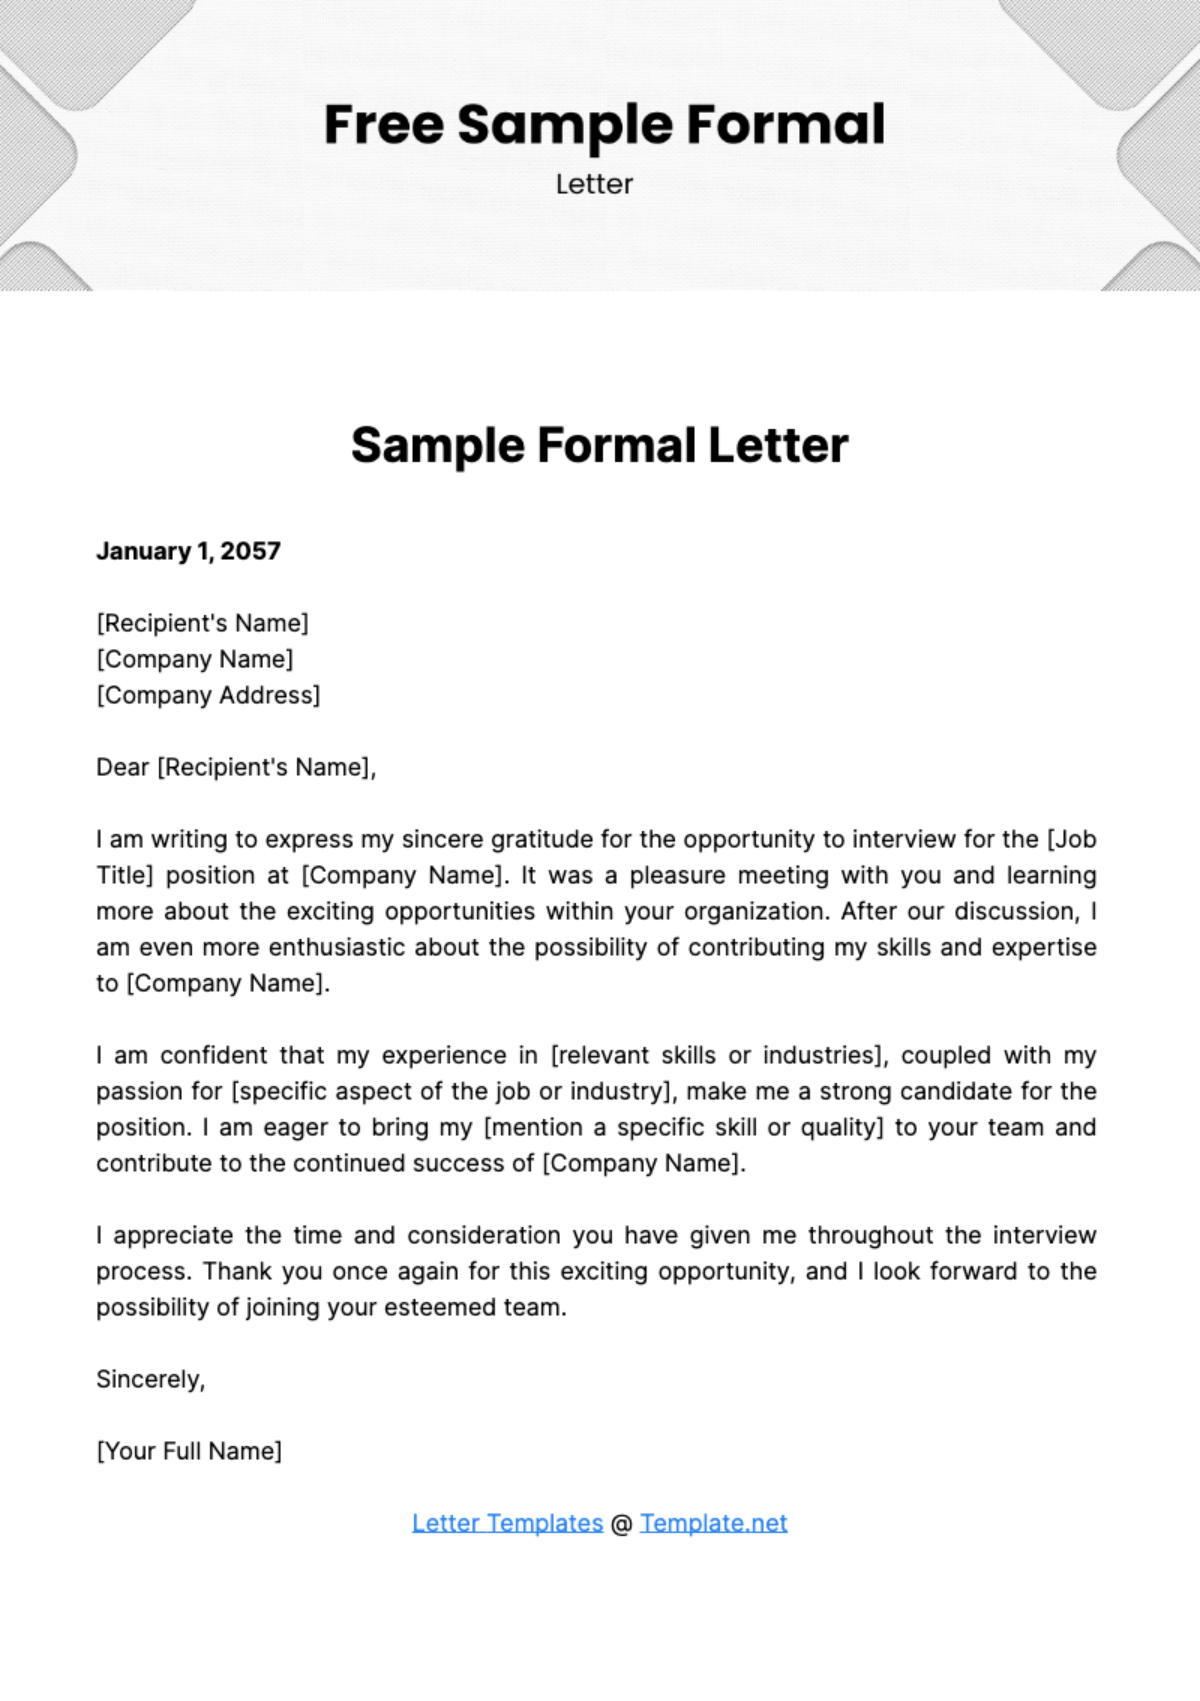 Free Sample Formal Letter Template